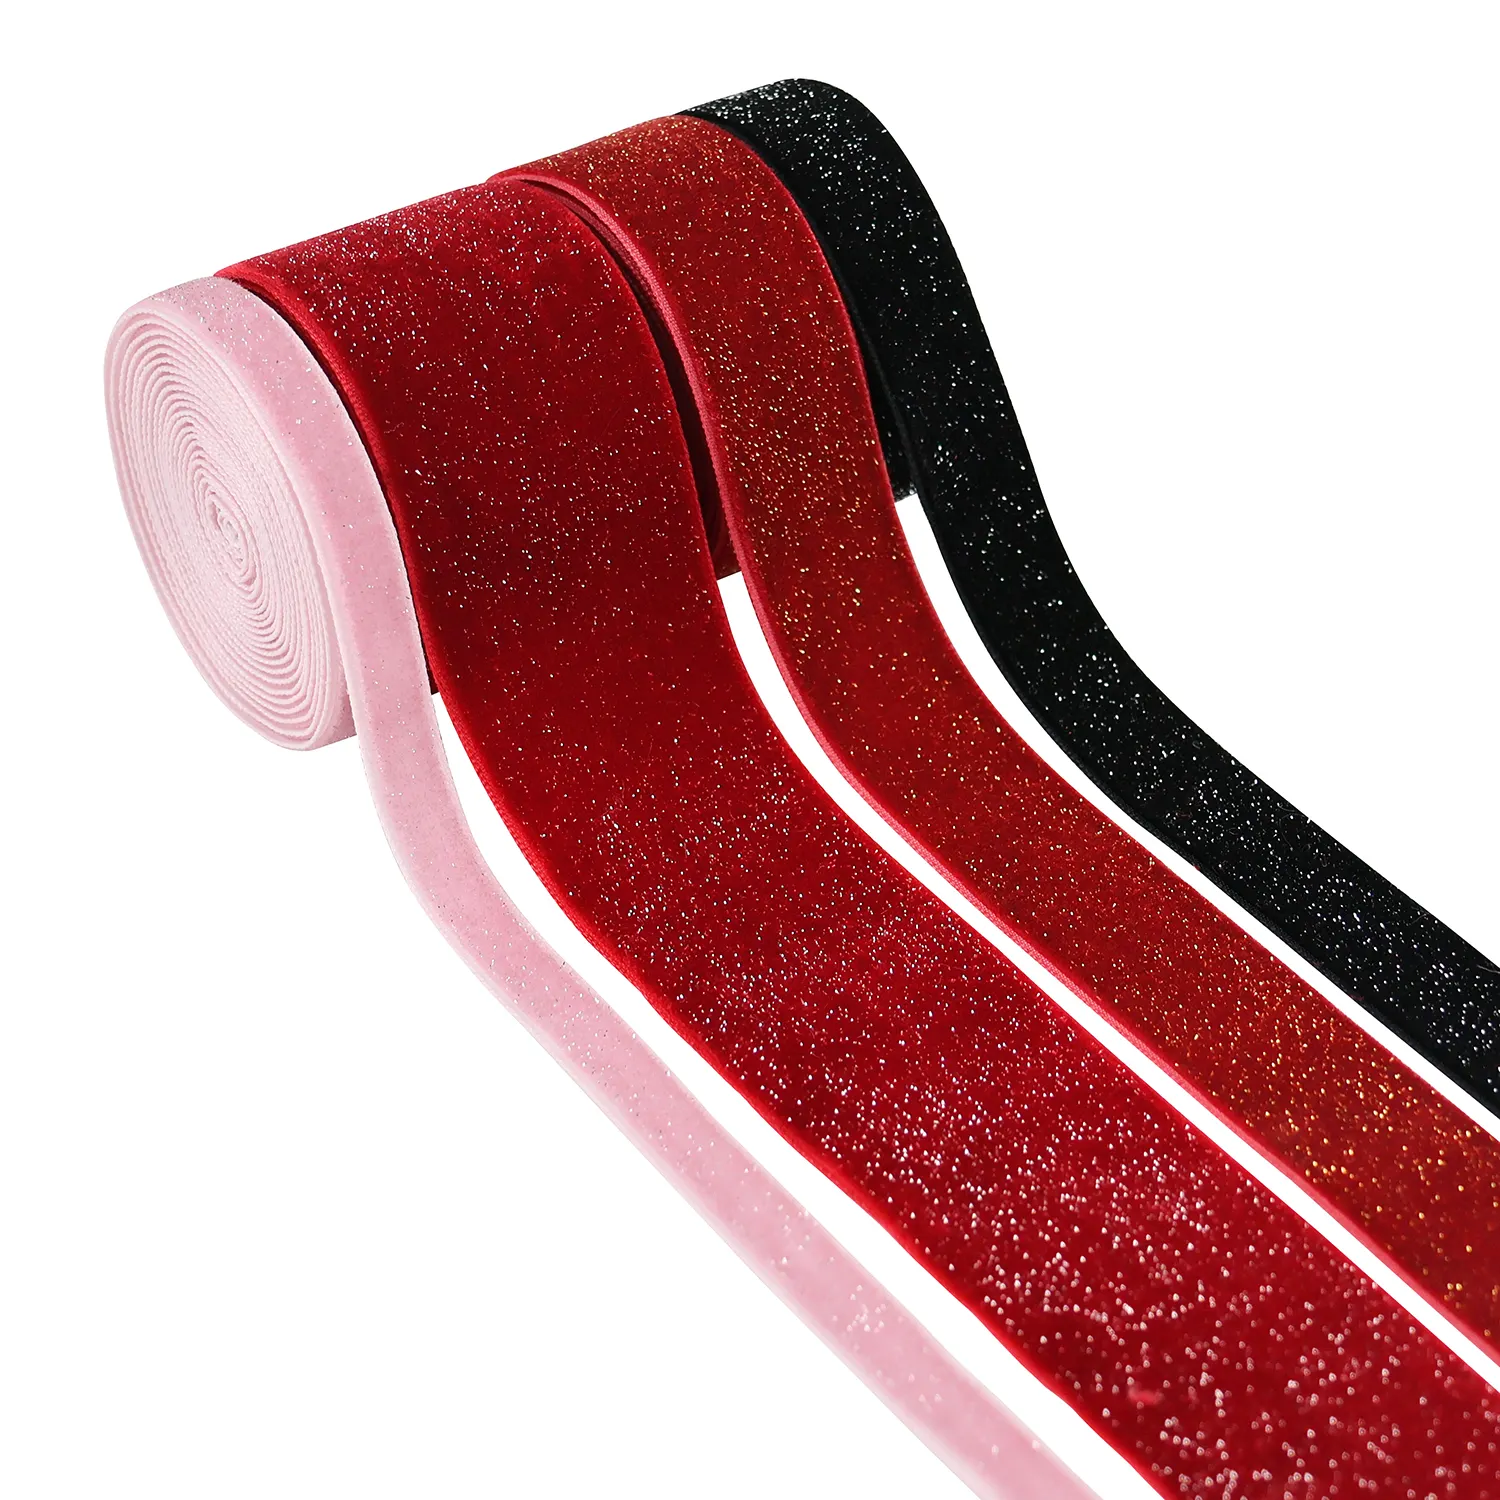 सिंगल फेस चमकदार लाल चमकदार मखमली रिबन बाल सहायक उपकरण धनुष कपड़े जूते सजावट केक पुष्प कला उपहार रैपिंग रिबन